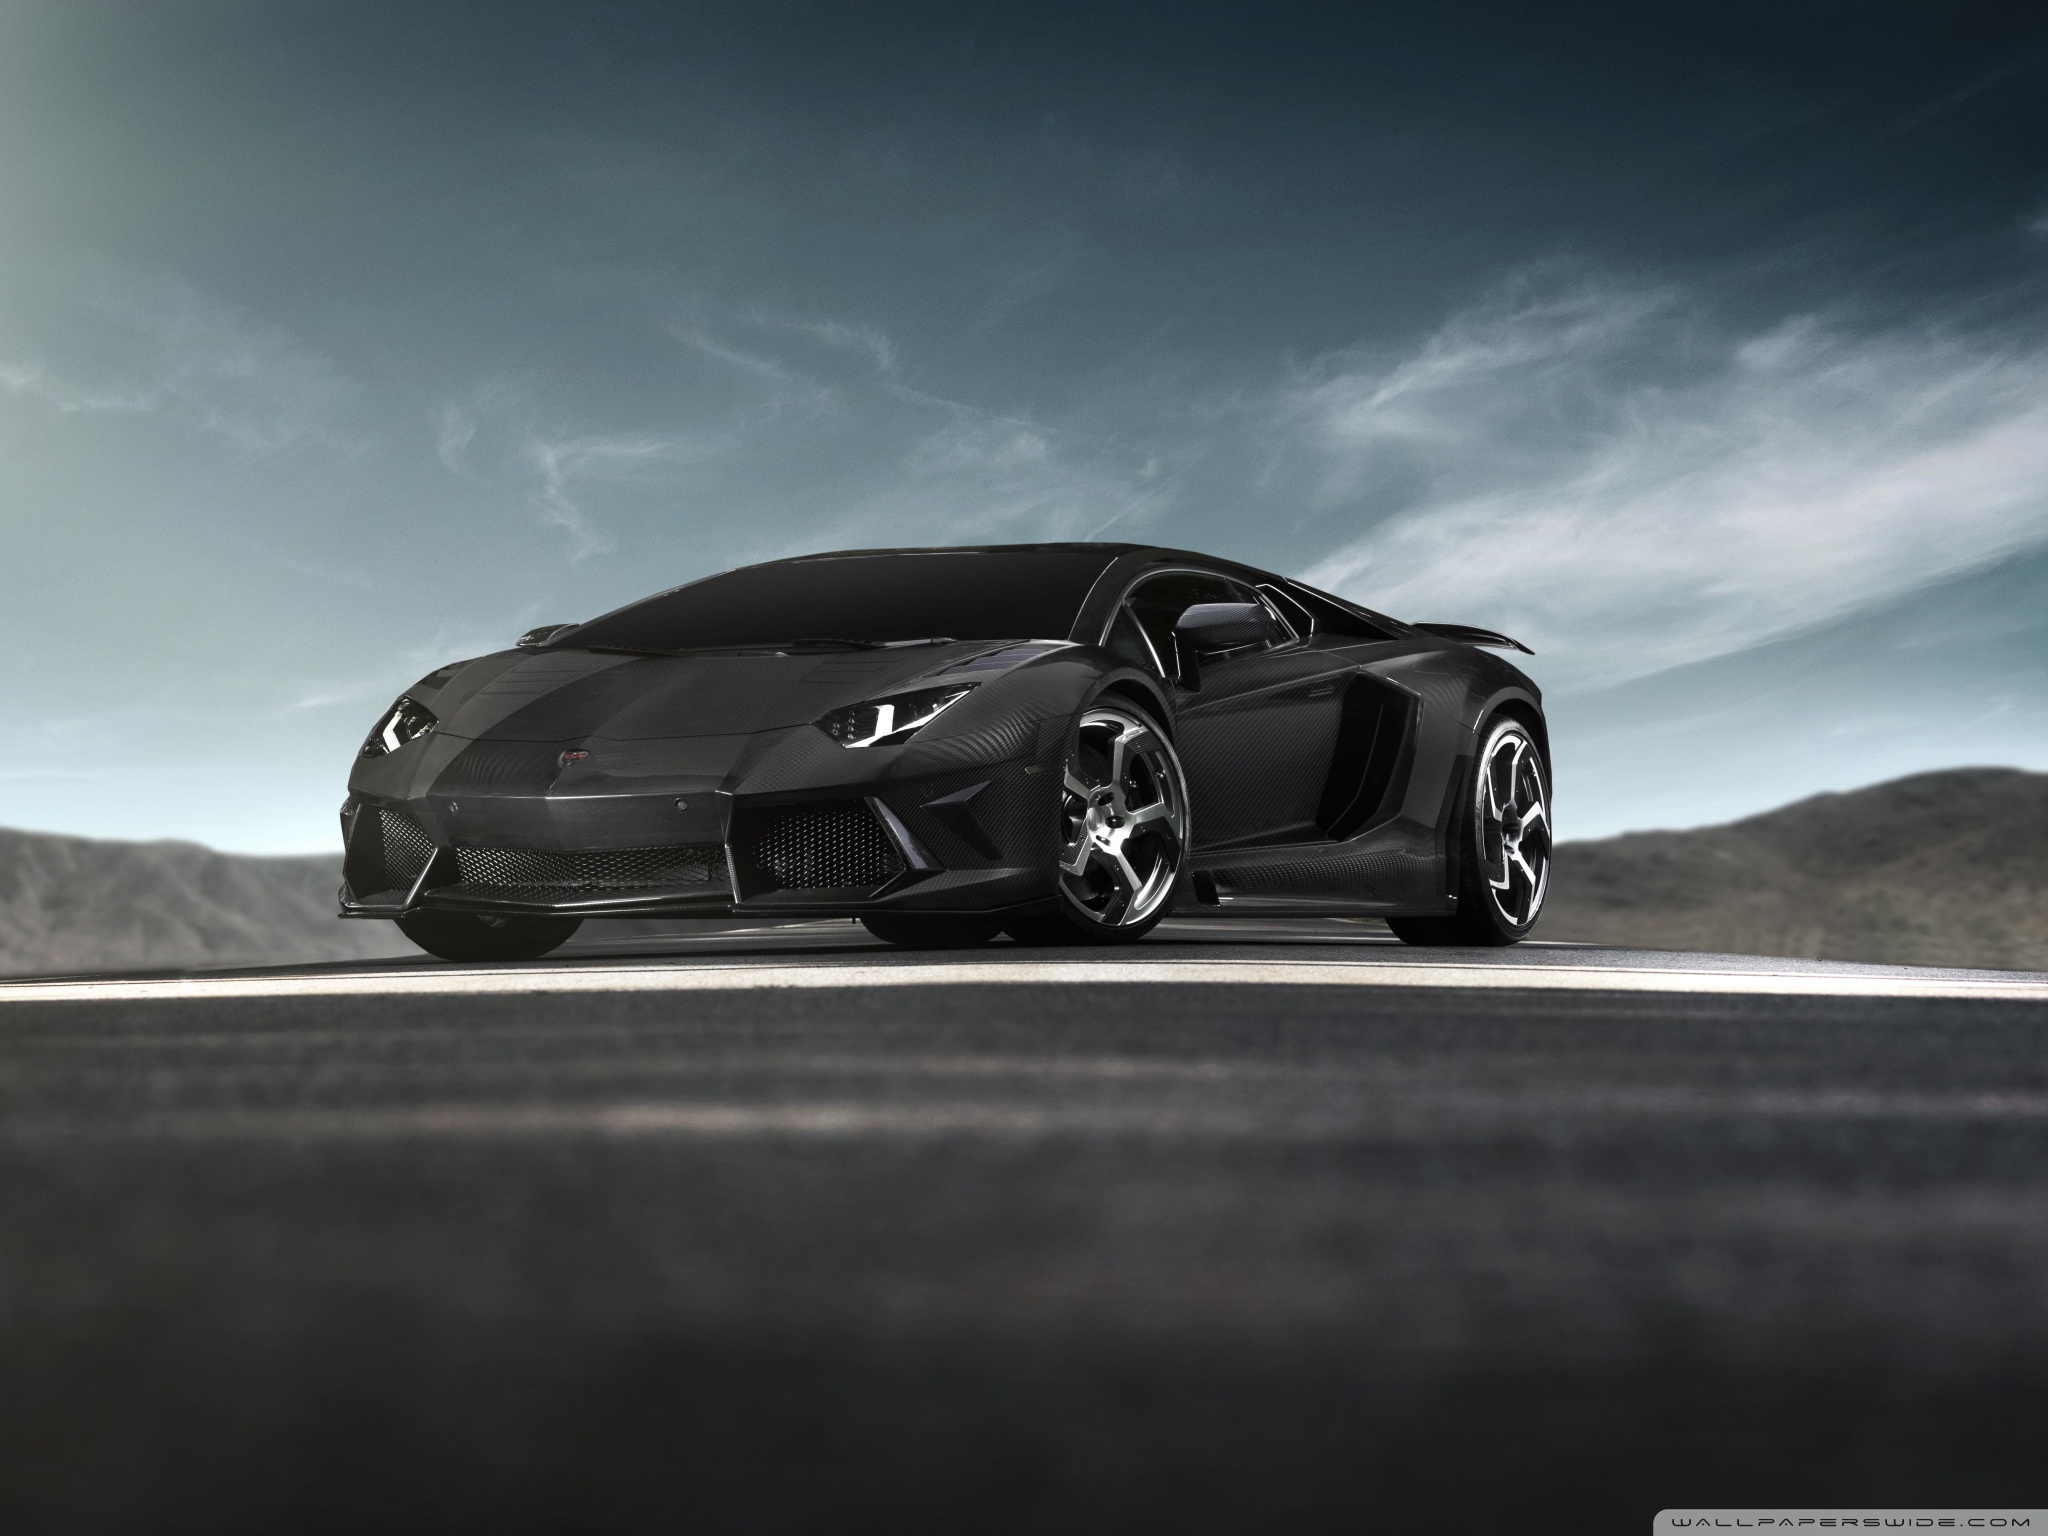 Black Lamborghini Aventador Supercar Ultra HD Desktop Background Wallpaper for 4K UHD TV, Multi Display, Dual Monitor, Tablet